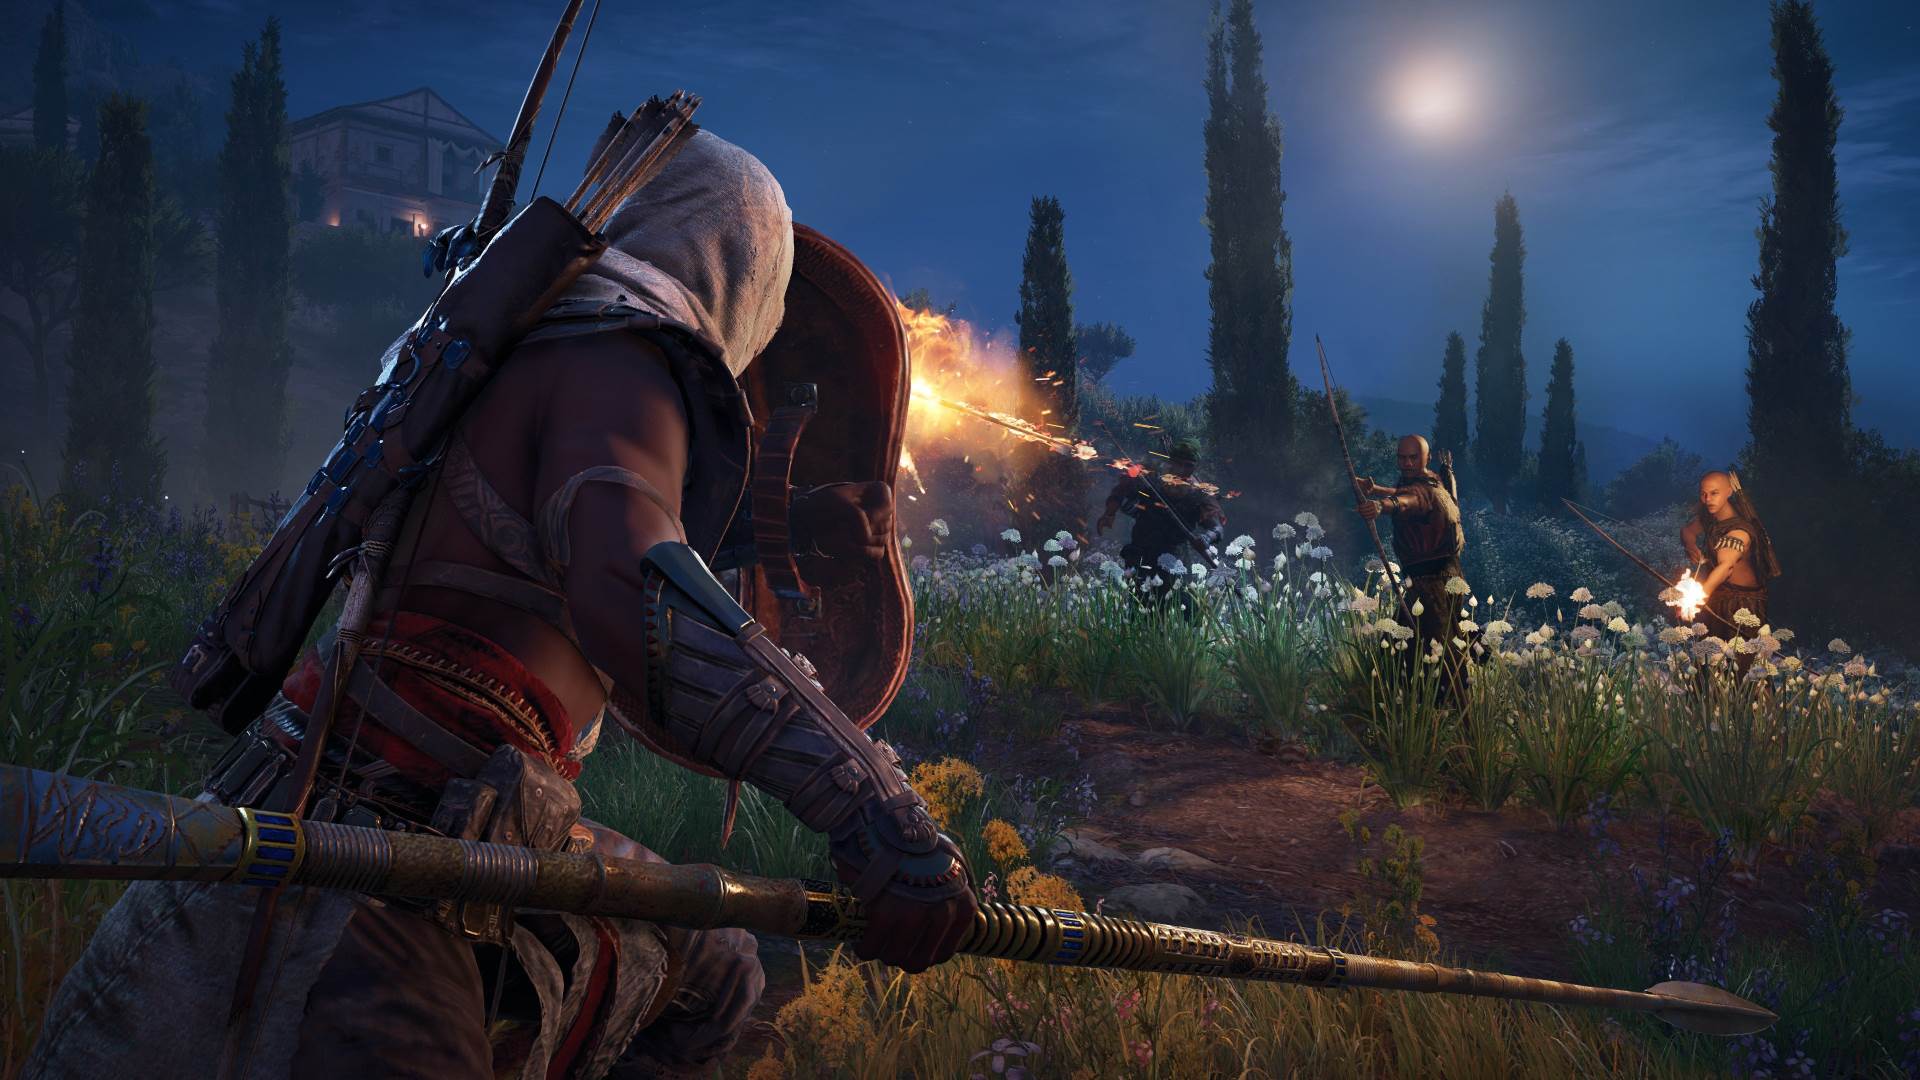  Impresivan Assassin’s Creed: Origins video (18+) 